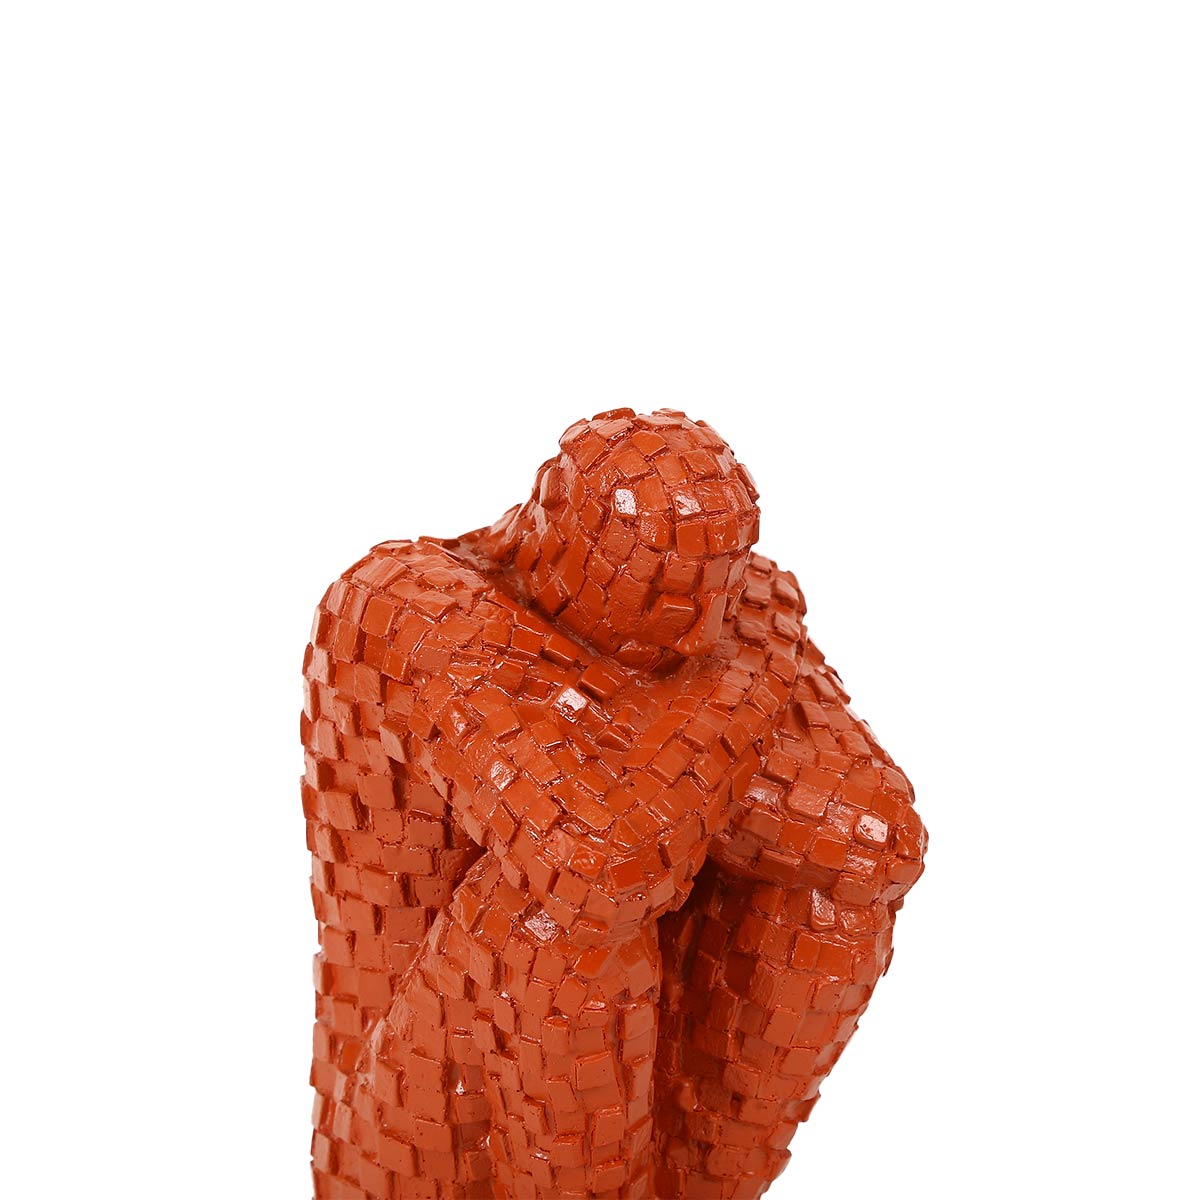 Thinking man sculpture Red